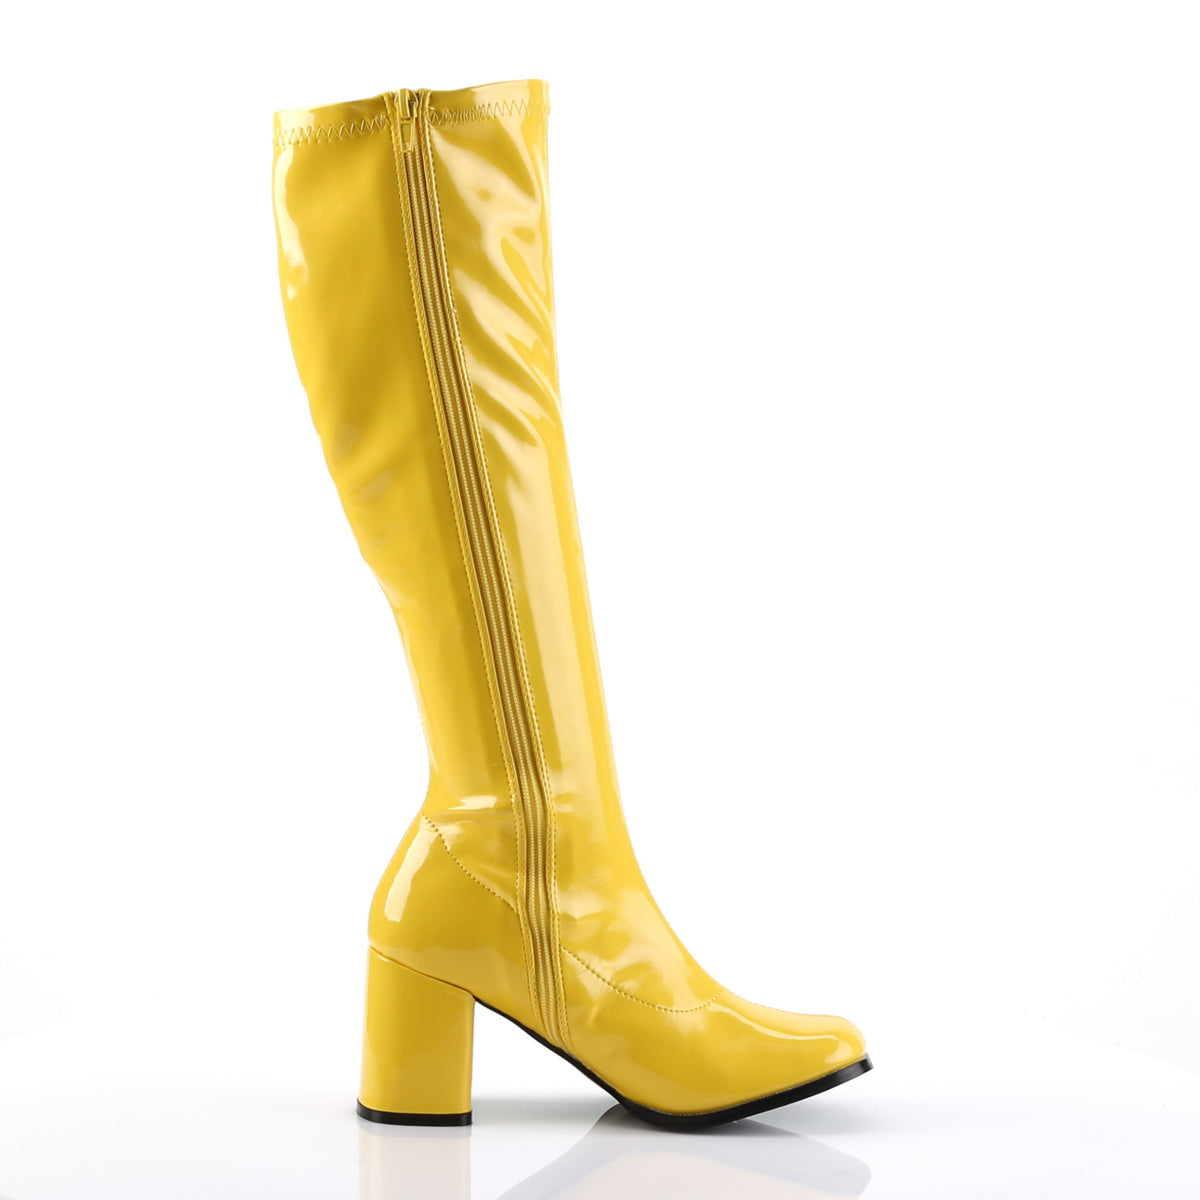 GOGO-300 Funtasma Fantasy Yellow Stretch Patent Women's Boots [Retro Knee High Boots]